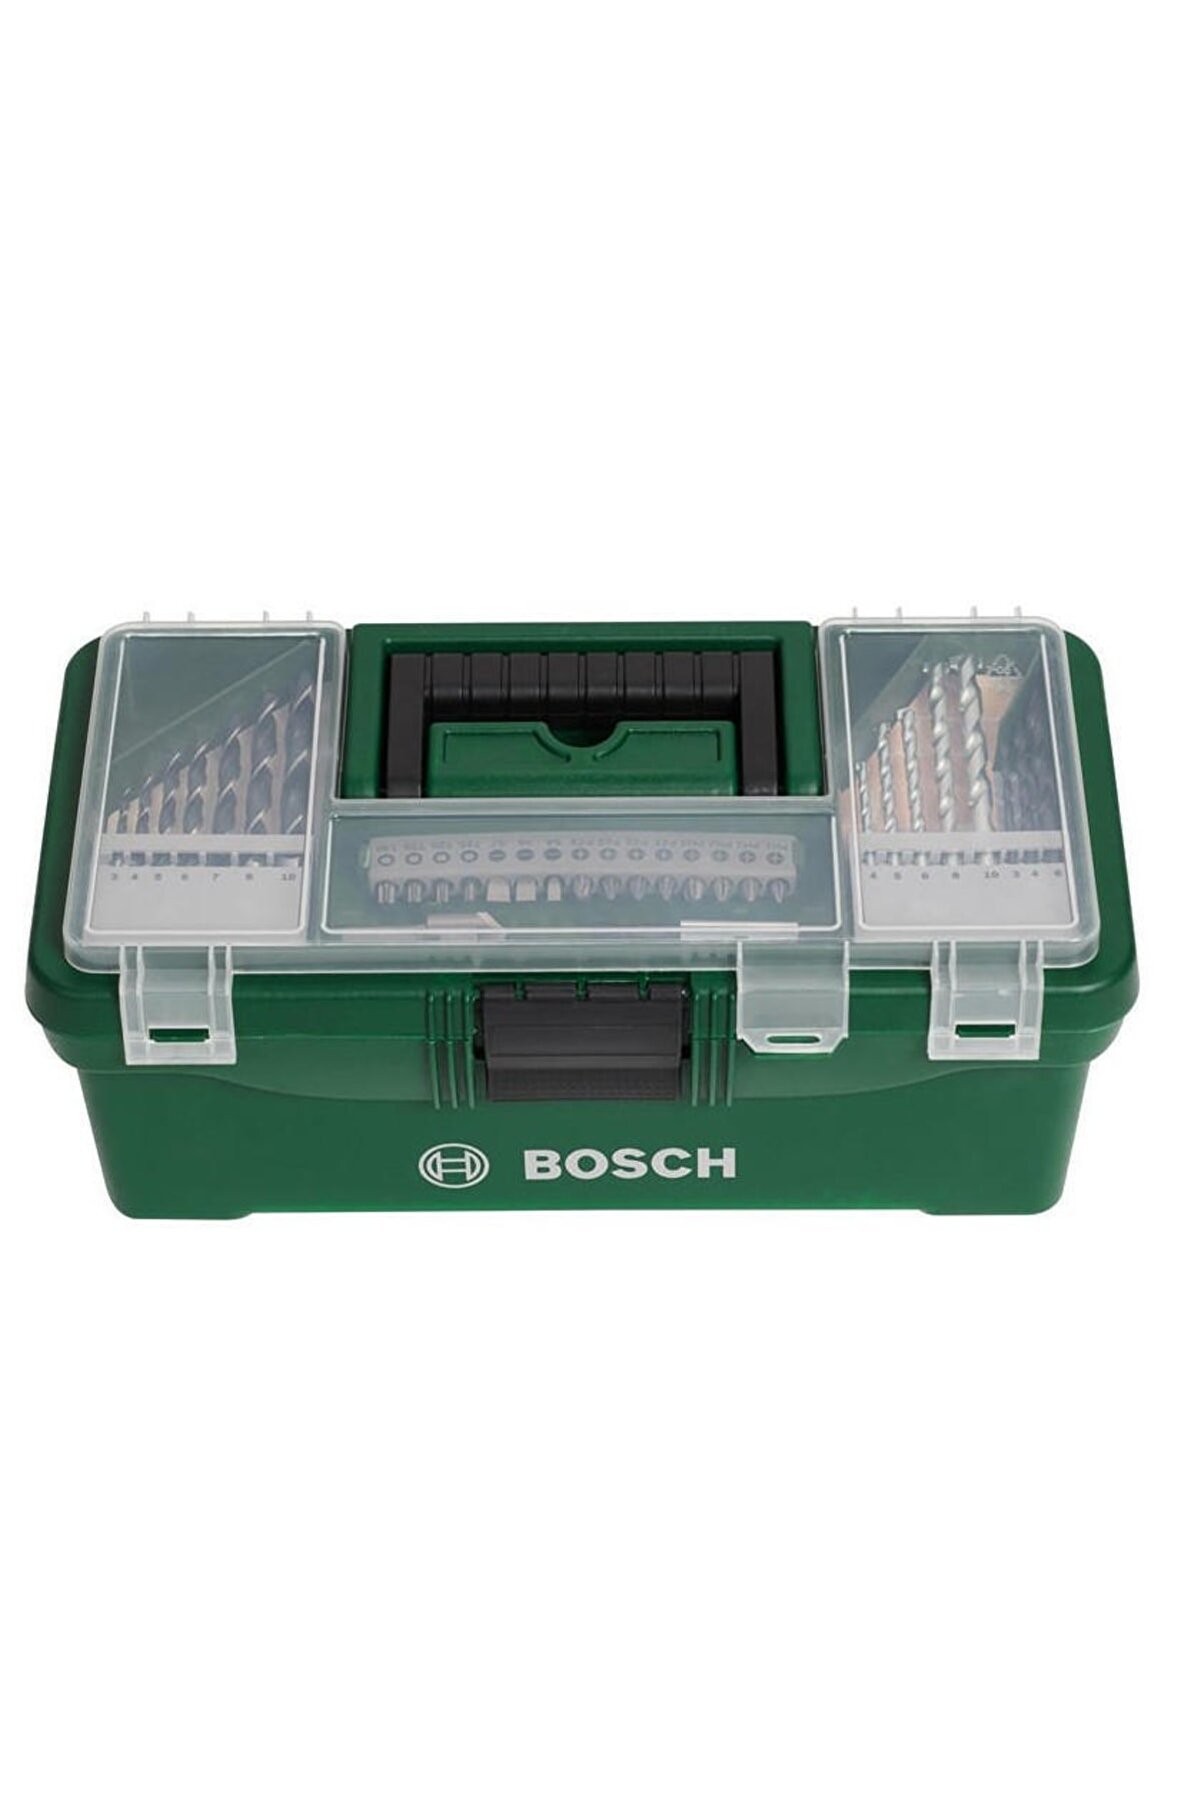 Bosch%2073%20Parça%20Takım%20Çantalı%20ToolBox%20Pro%20Aksesuar%20Seti